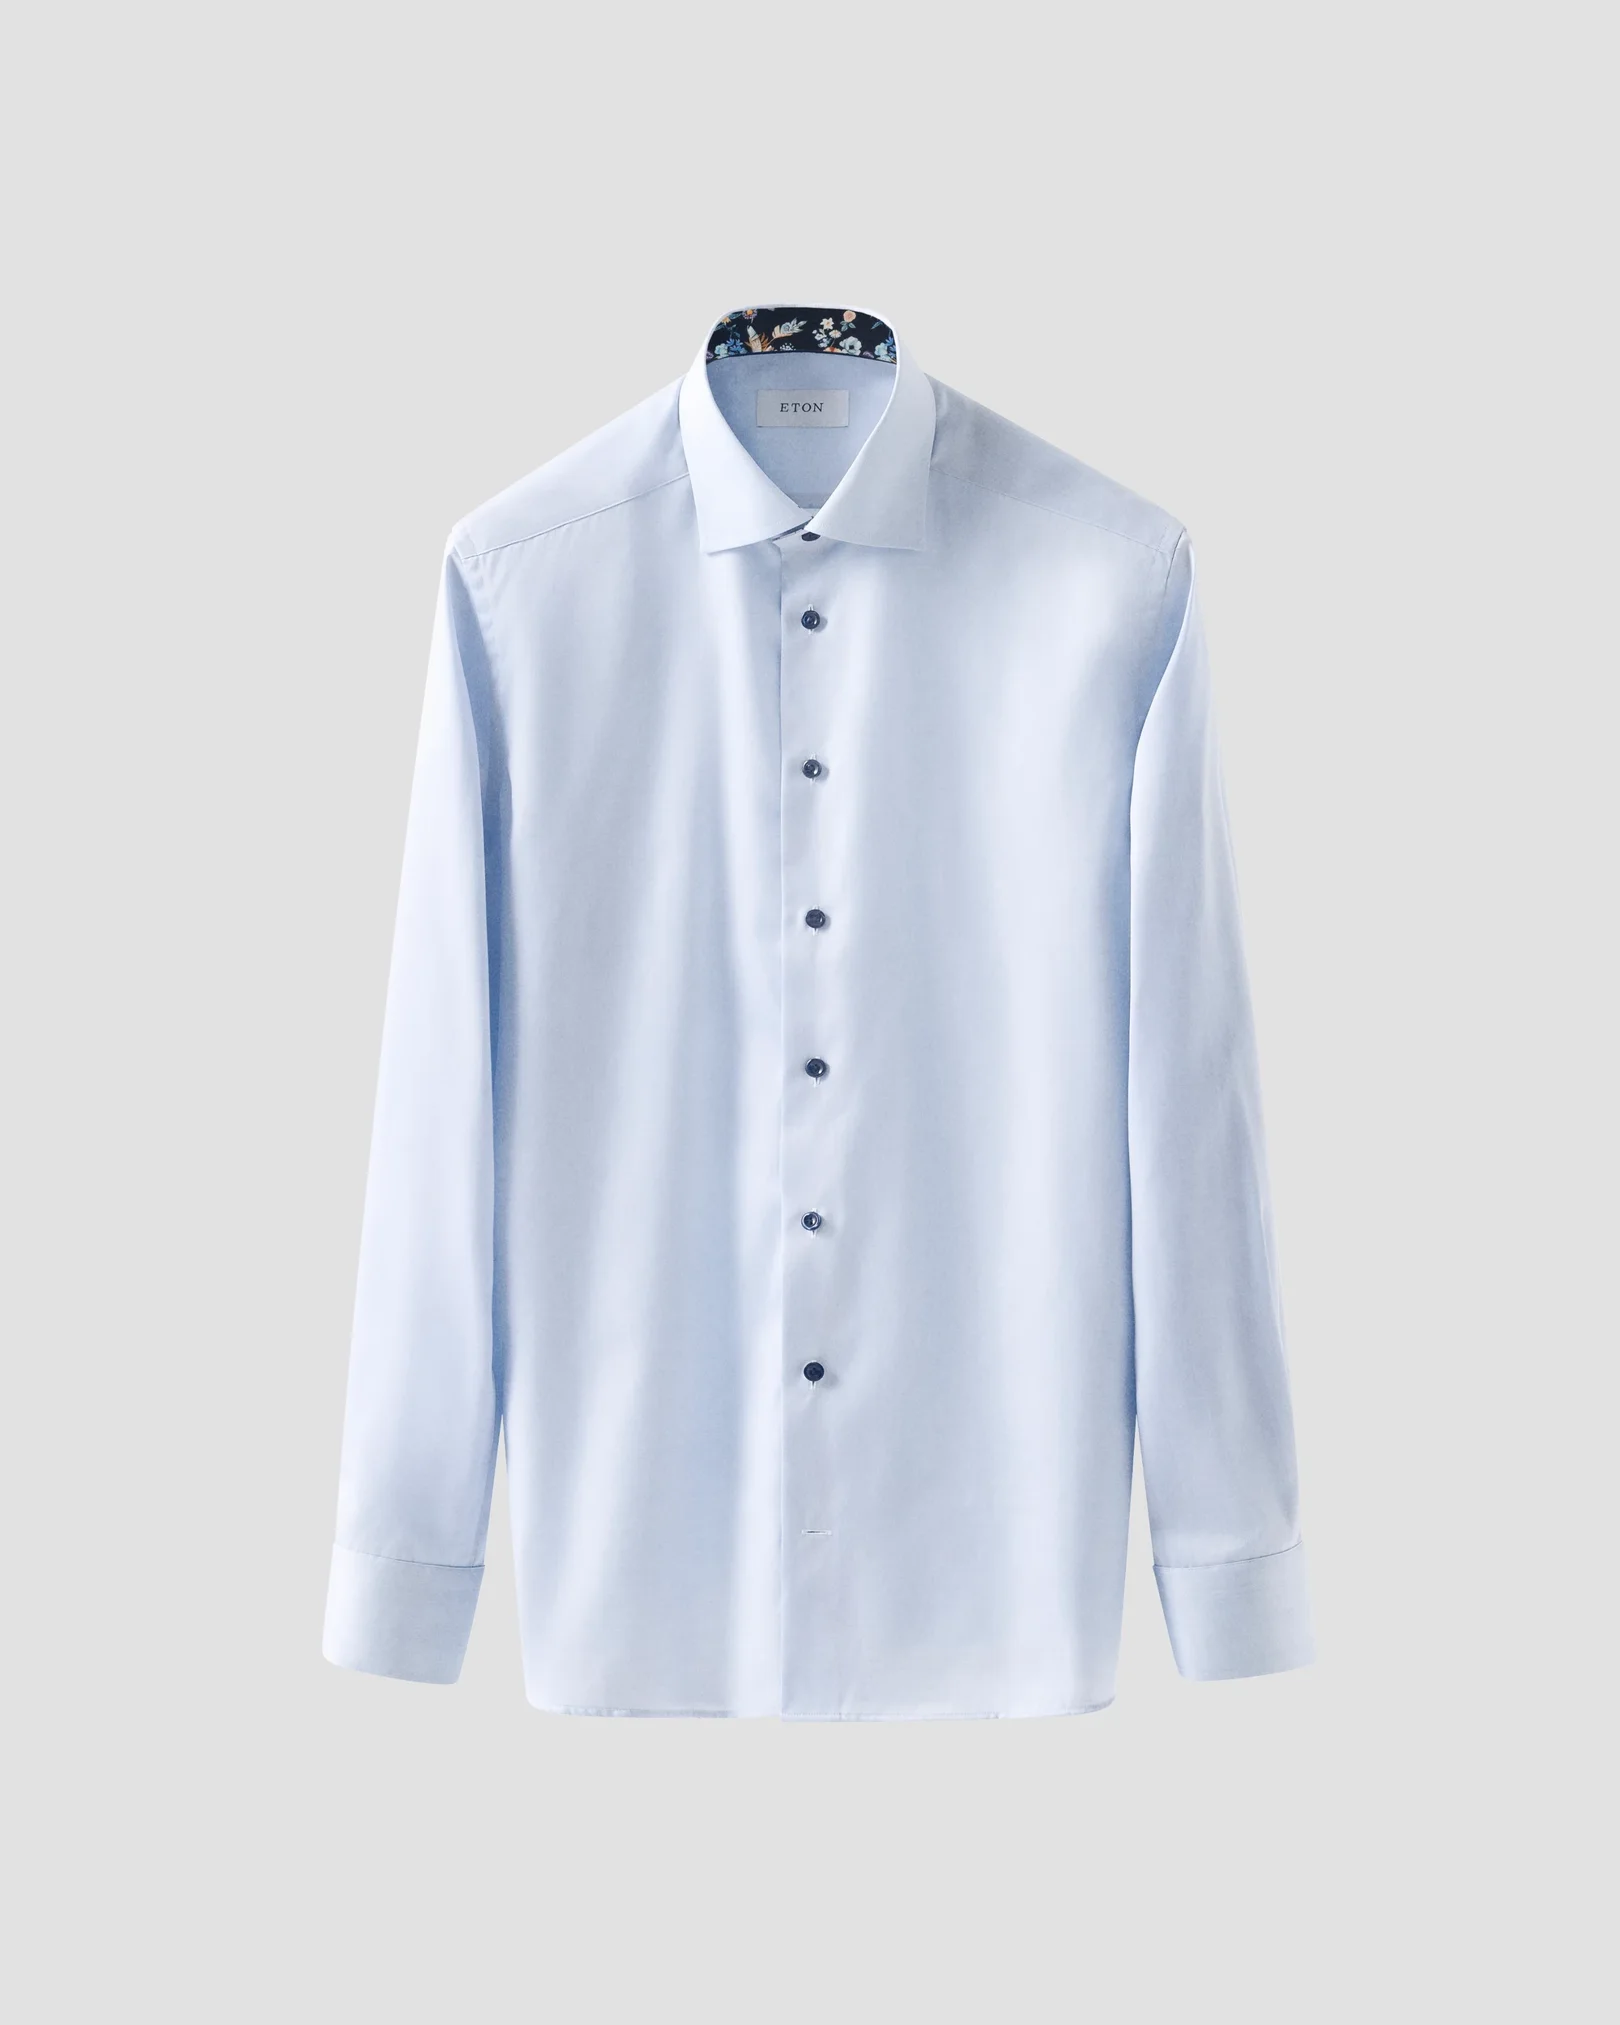 Eton - light blue floral effect shirt